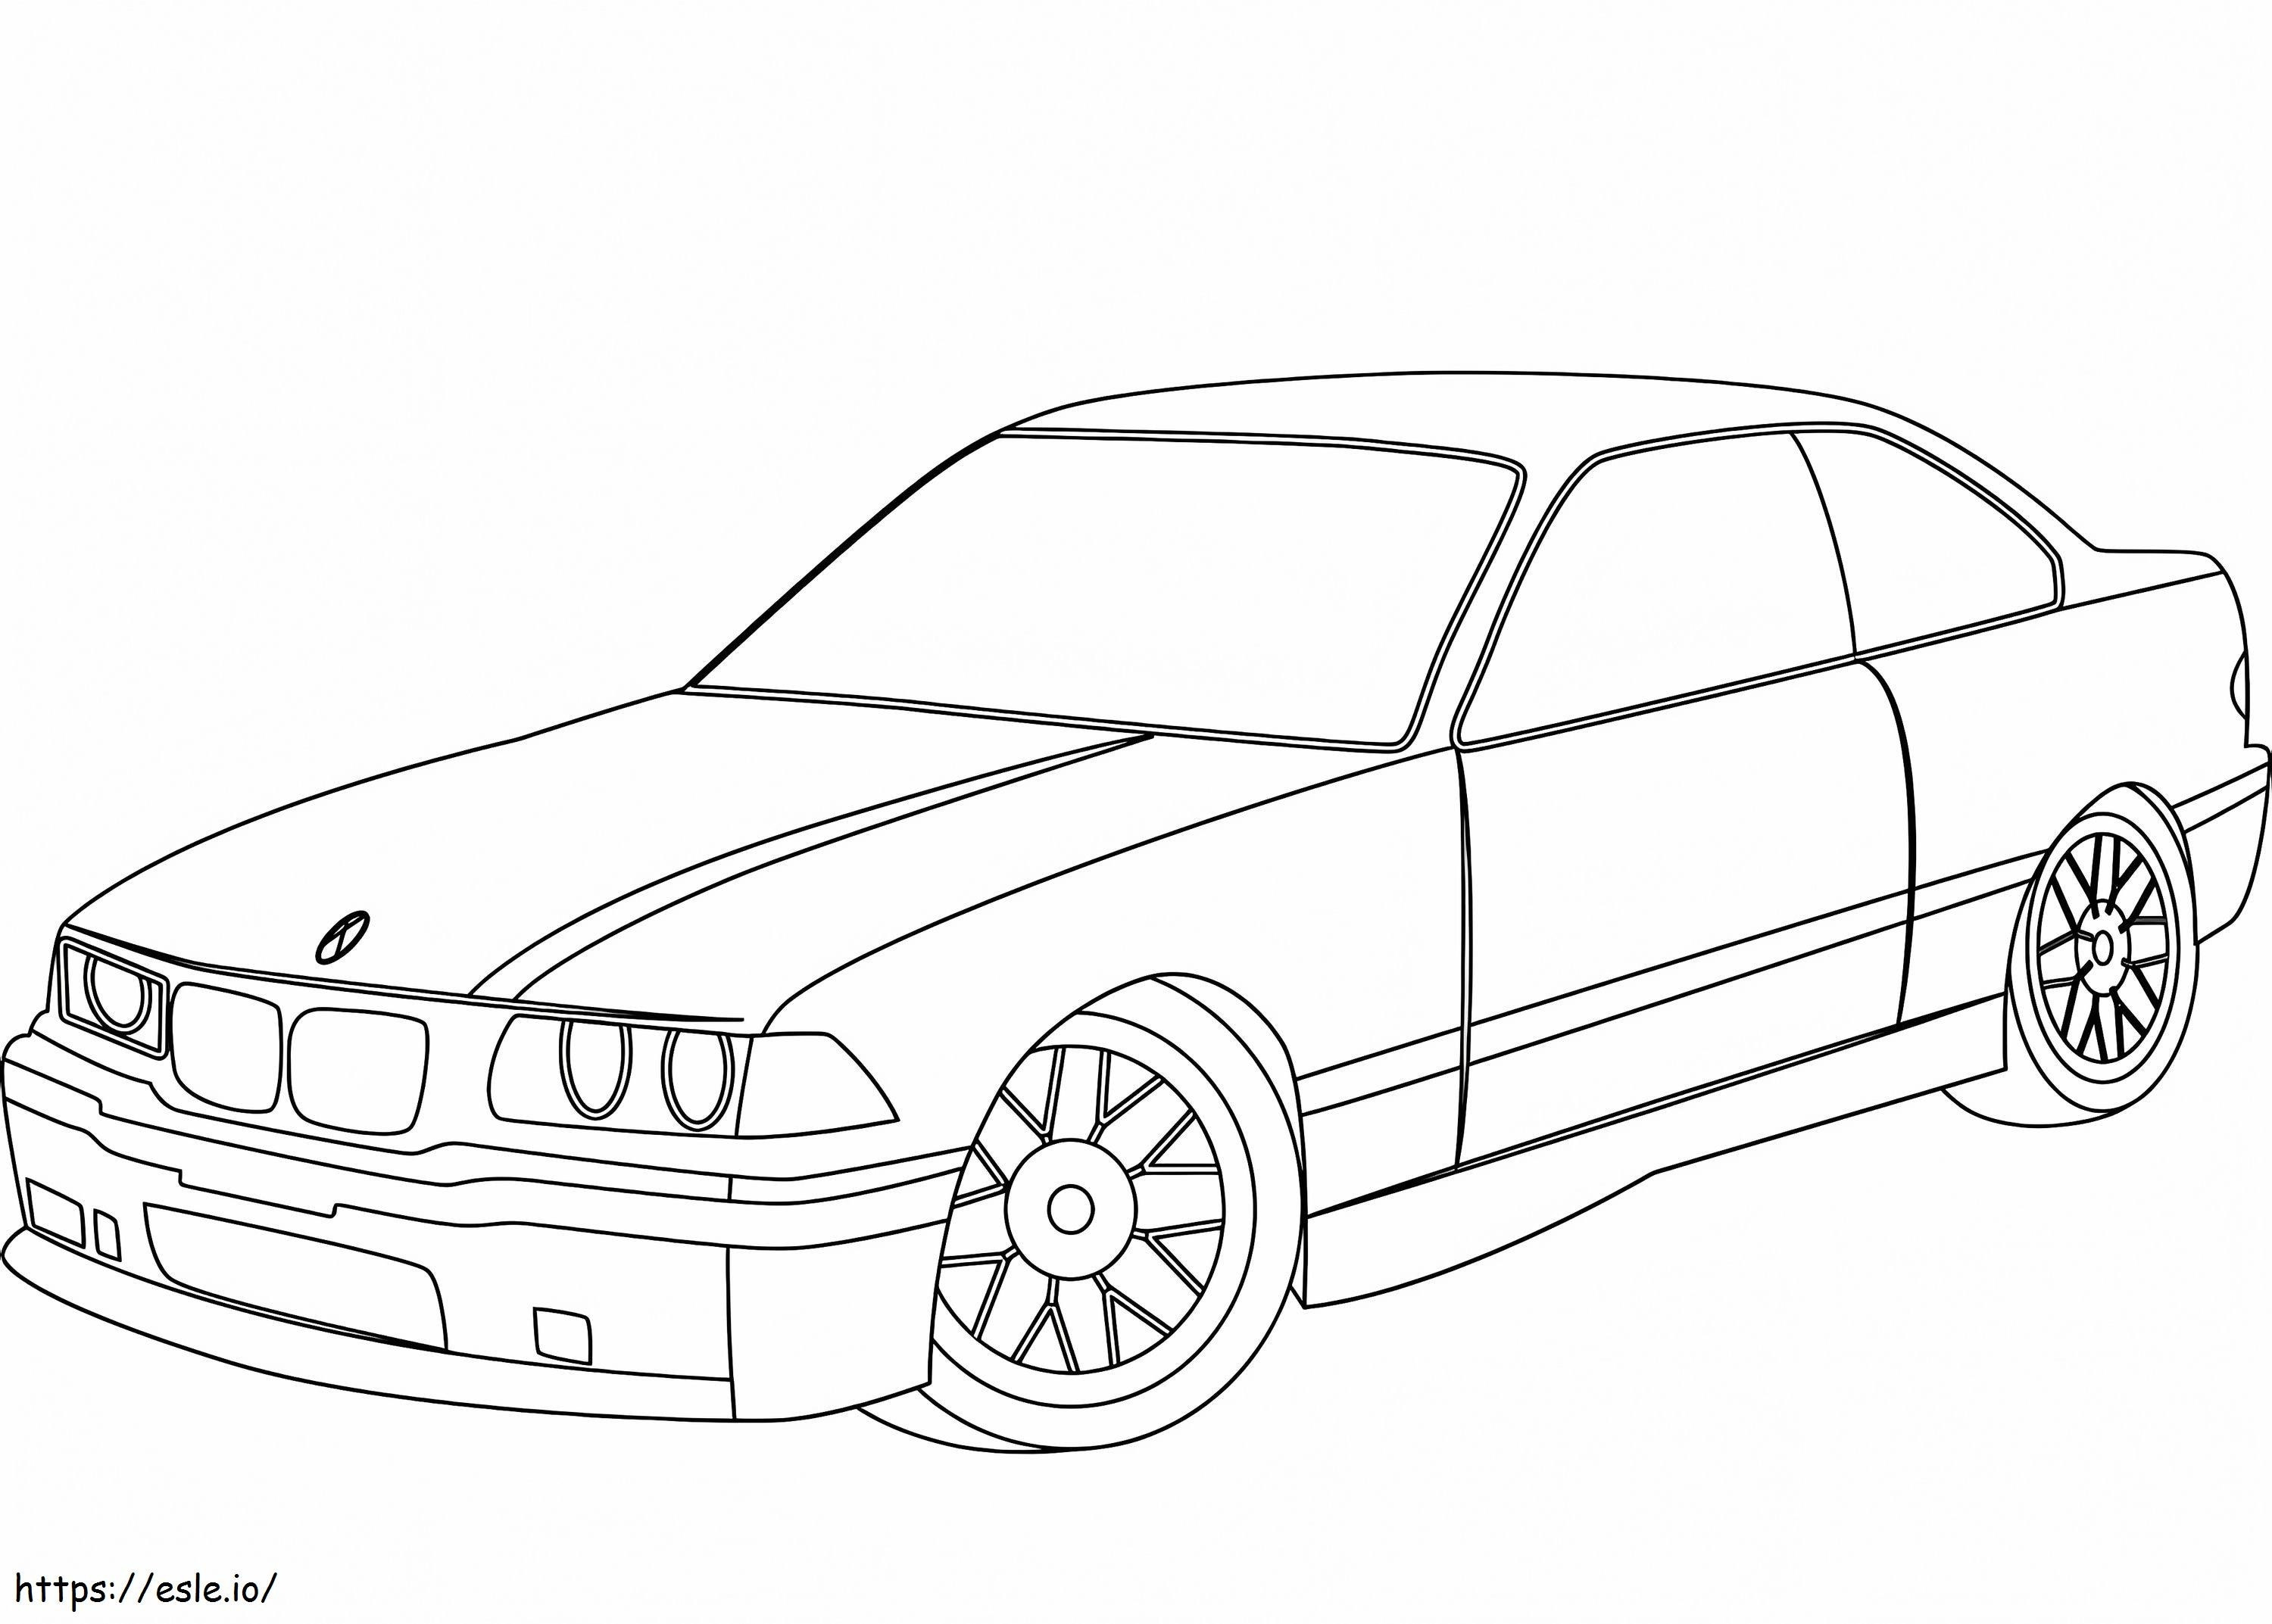 BMW E36 ausmalbilder